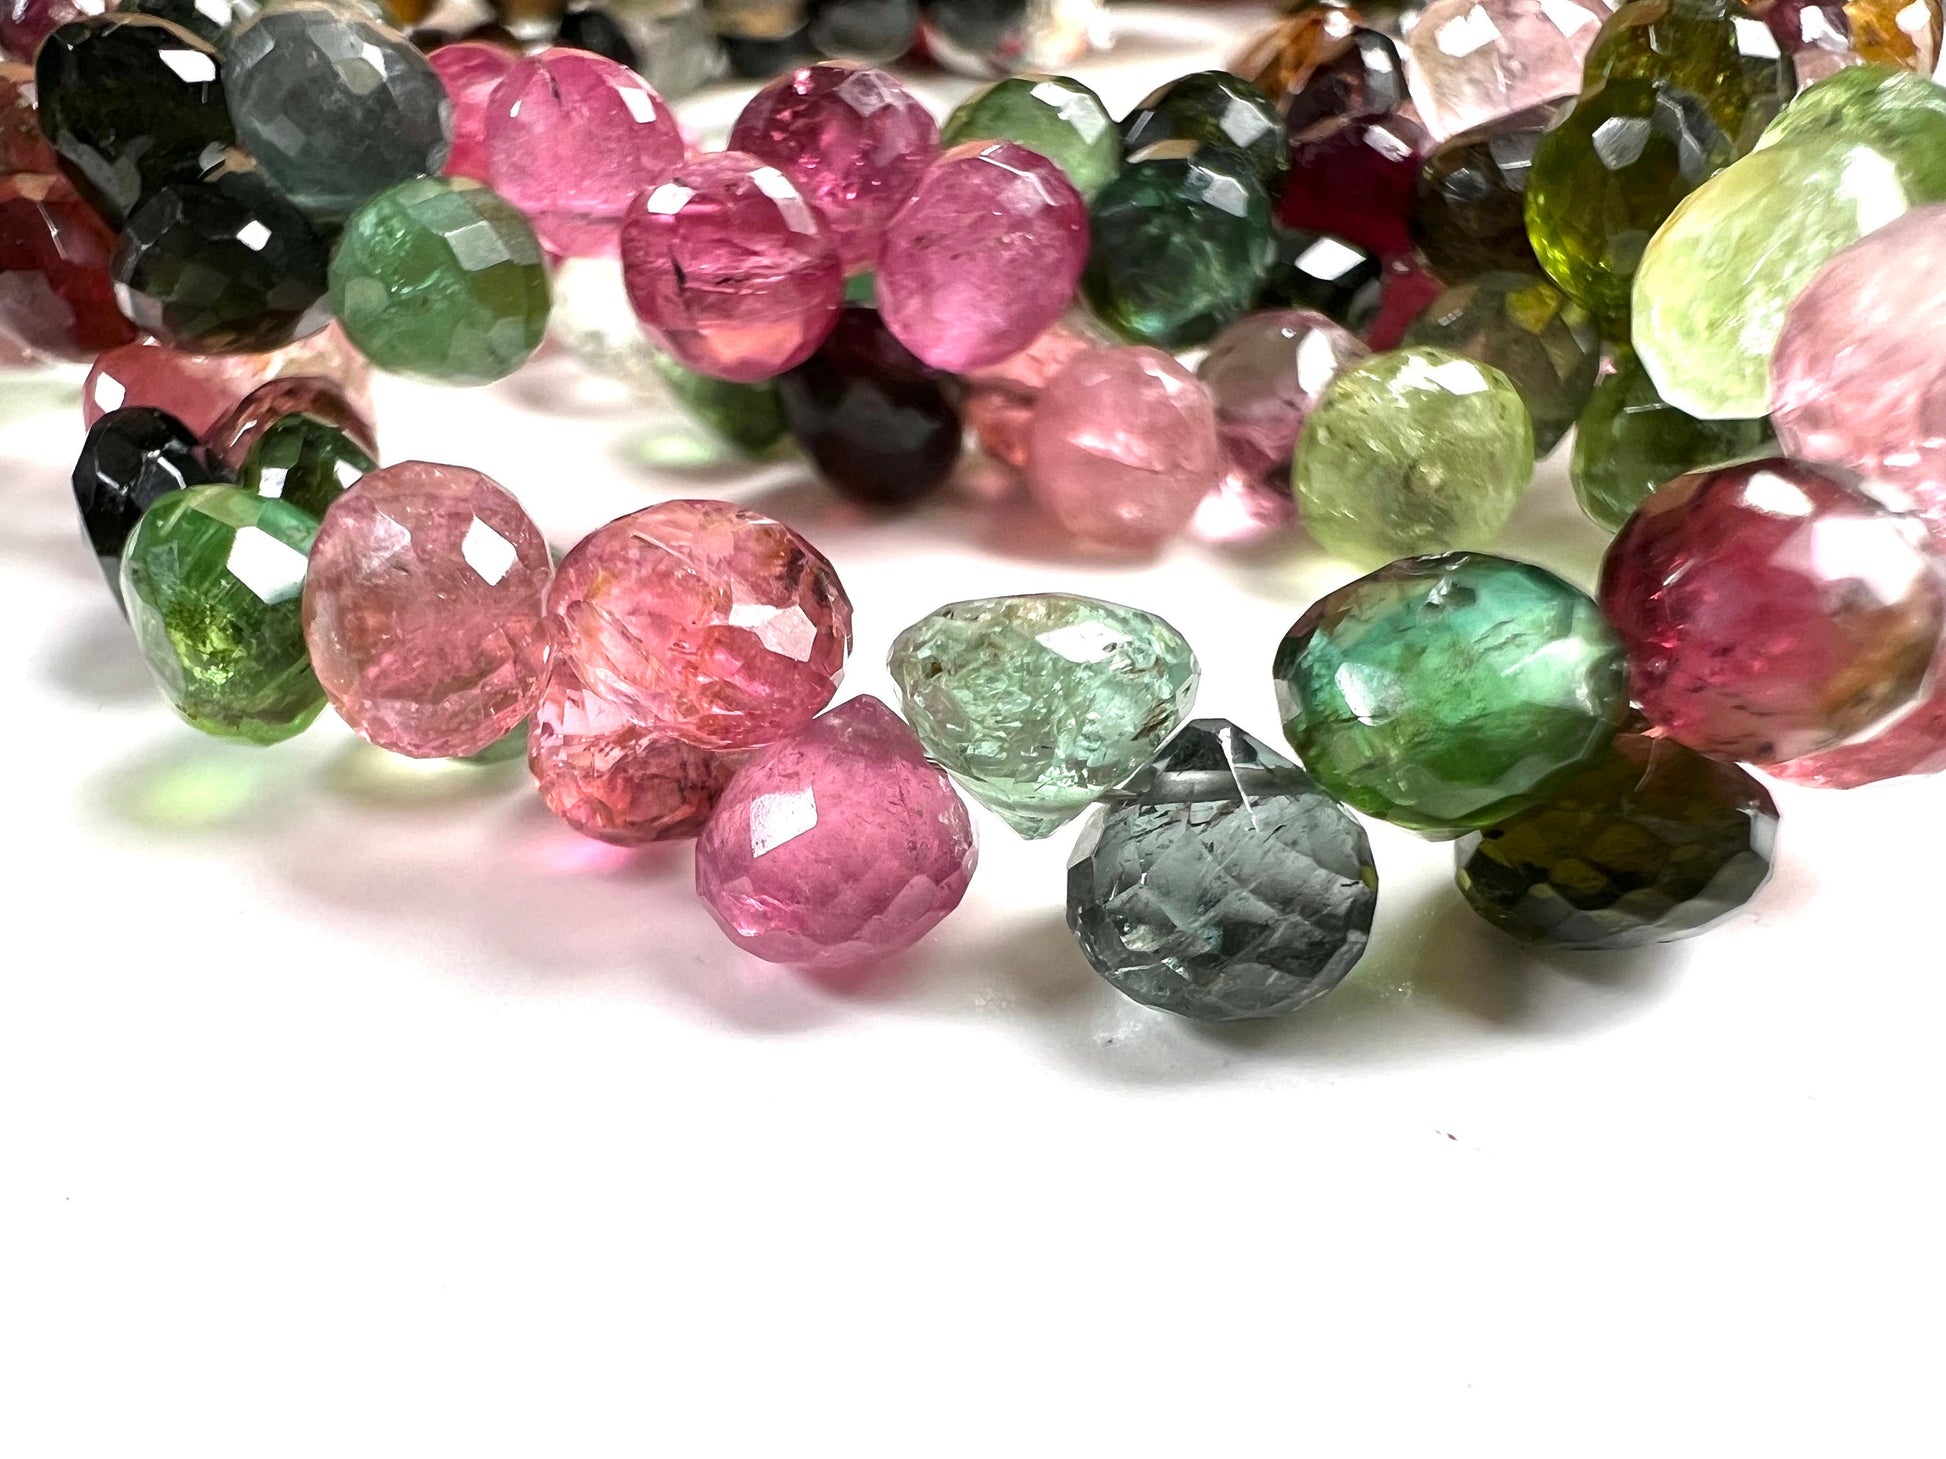 Multi Tourmaline Faceted onion drop 6-6.5mm Jewelry Making drop beads, AAA Quality Gems. 30 pcs, 60 pcs